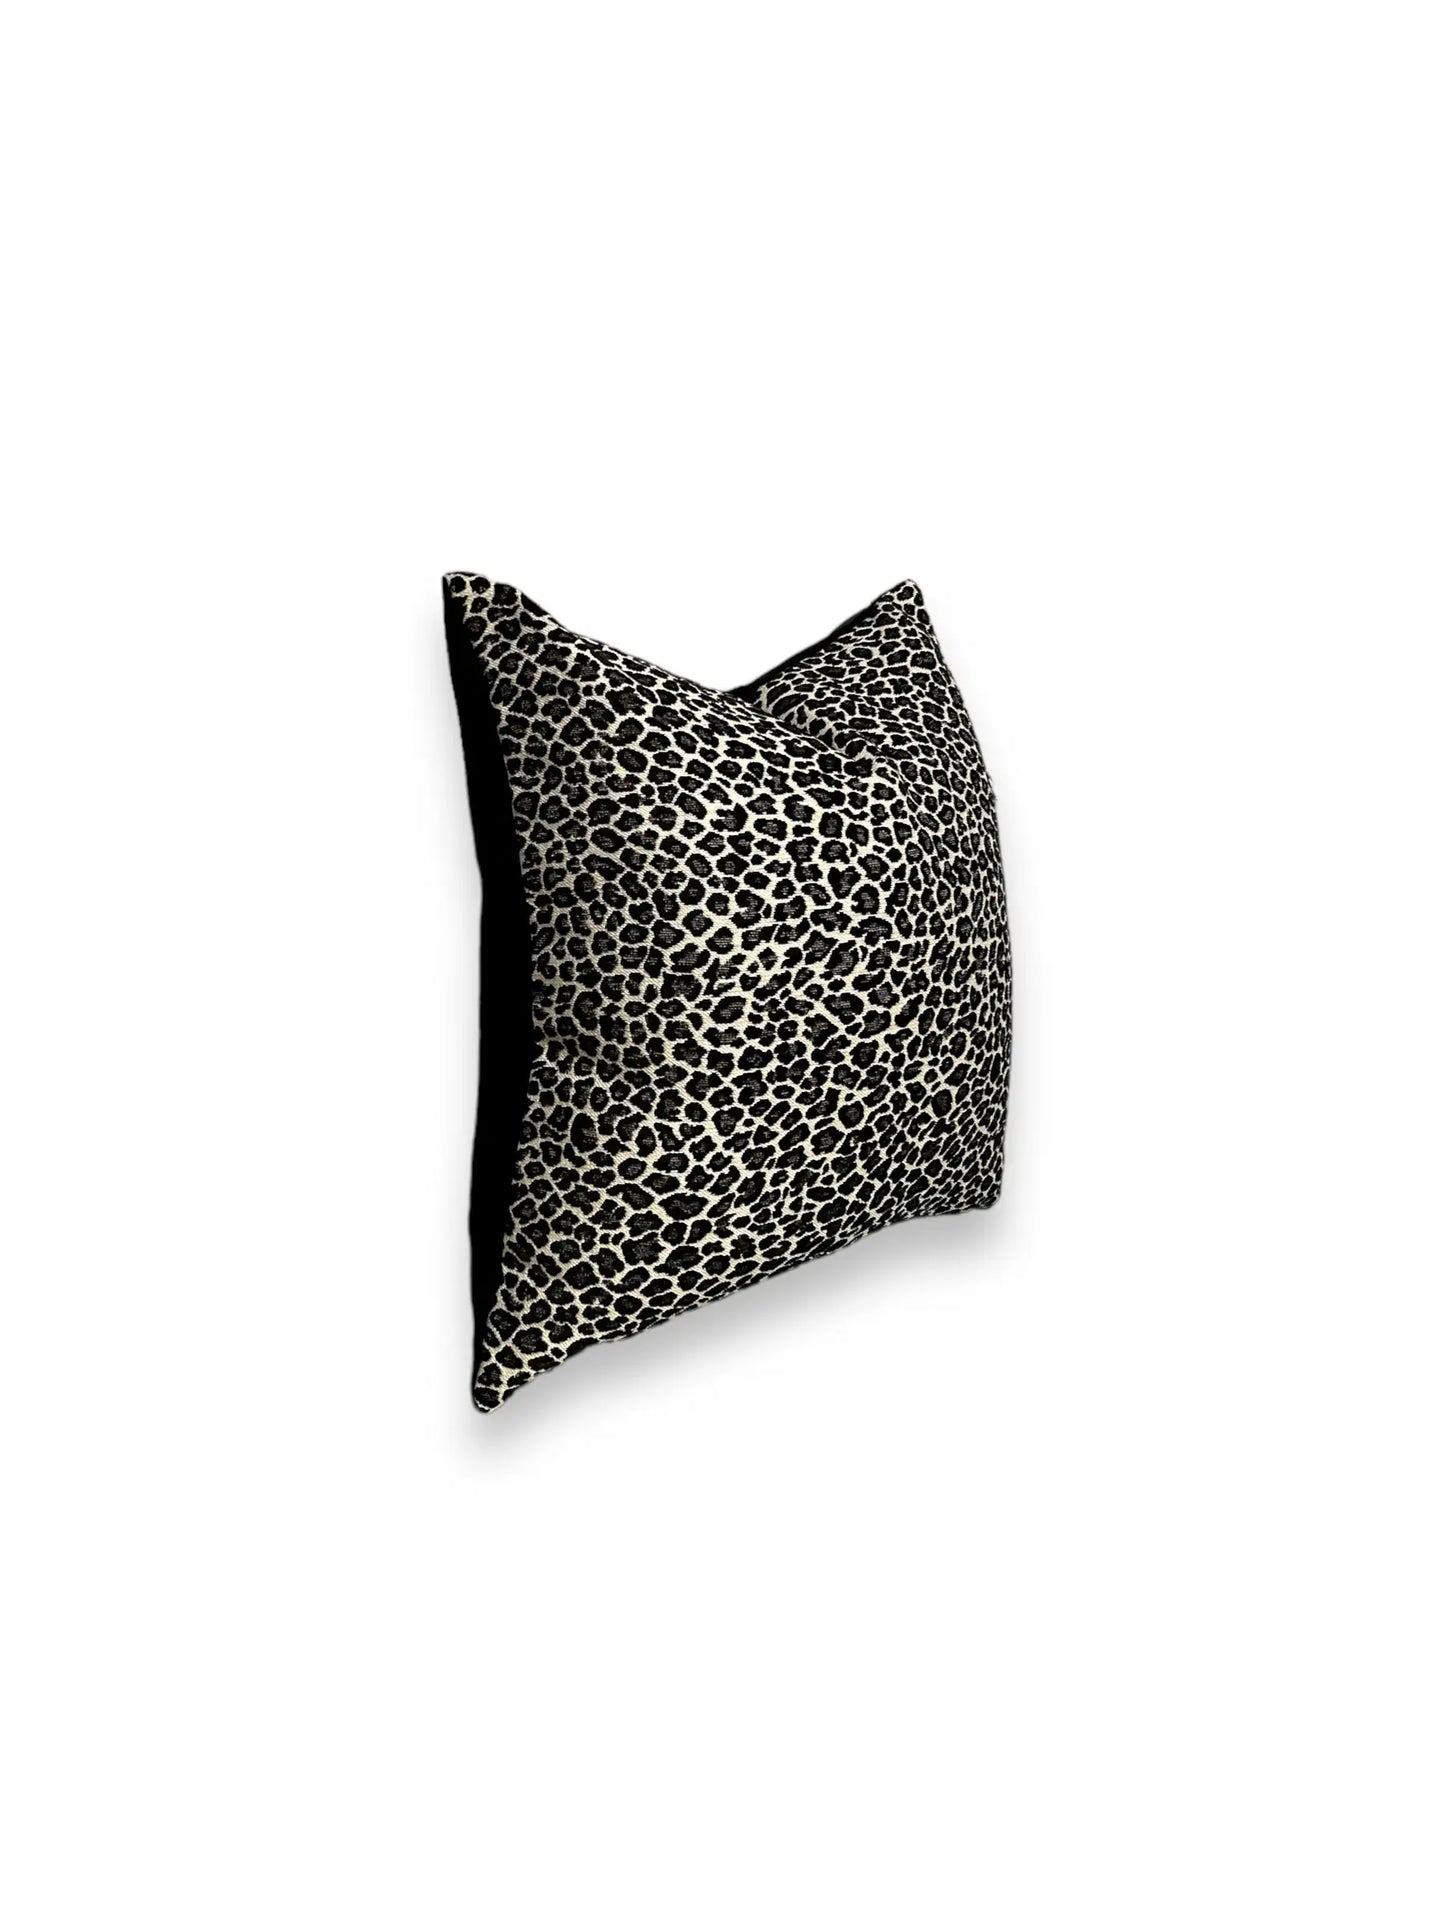 Focus : Leopard Print Pillow Cover AliJ Designs